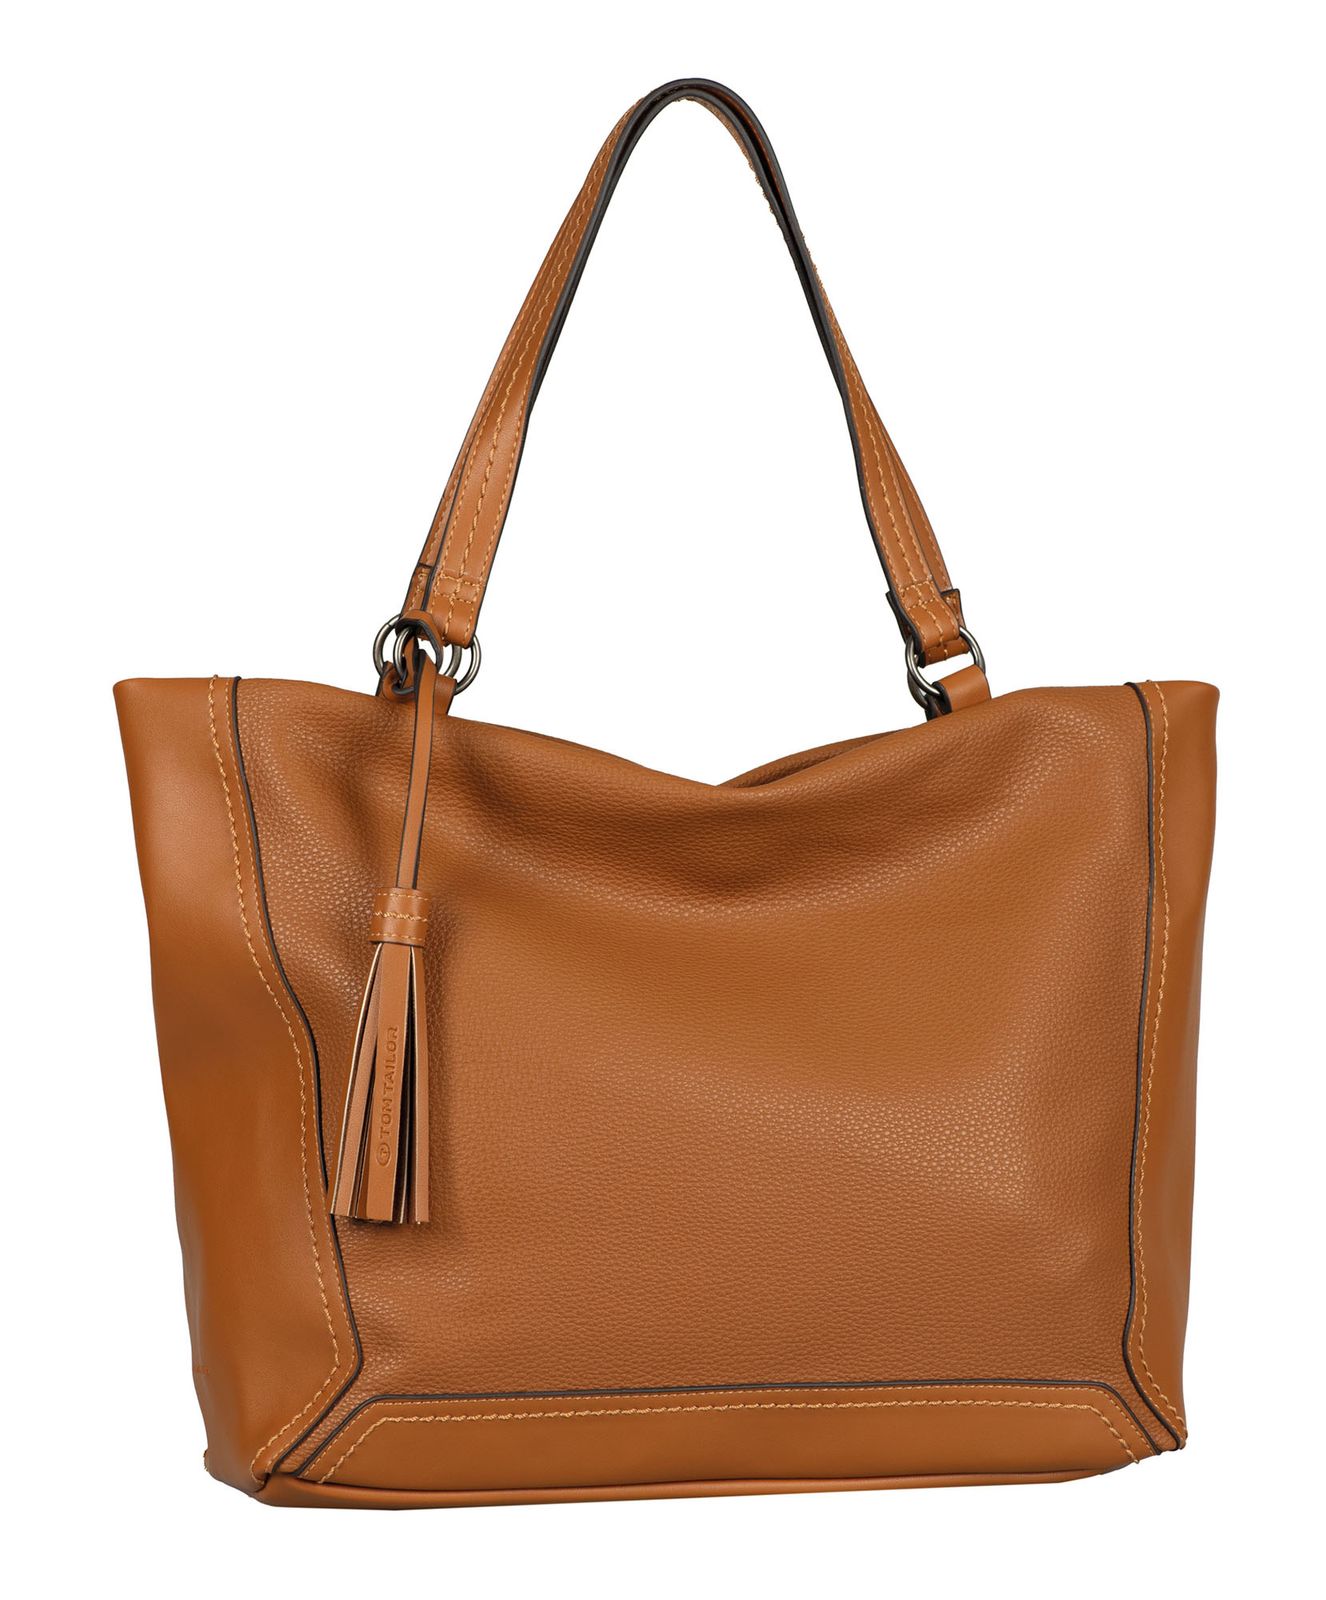 TOM TAILOR shopper bag Isa modeherz & Zip | | online bags, L Cognac purses accessories Buy Shopper